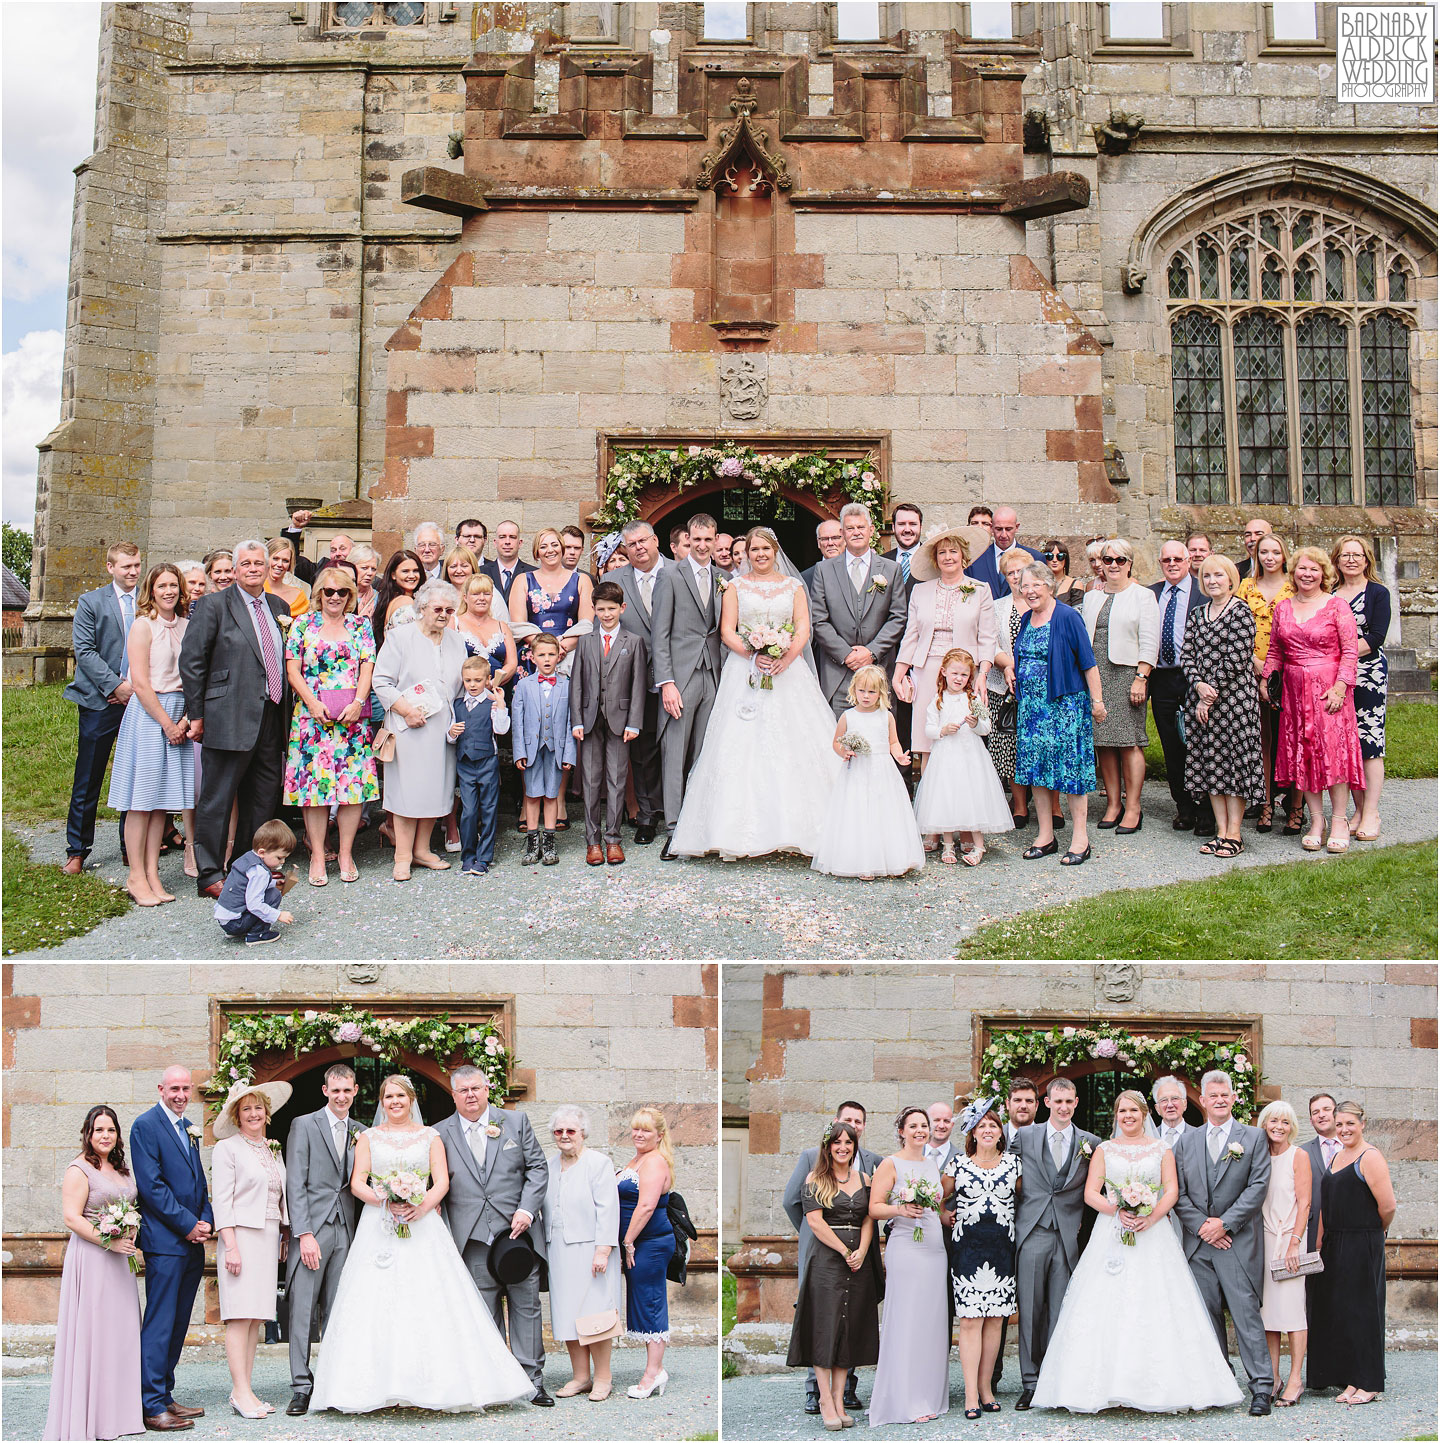 Shropshire Wedding Photography, Wedding Photographer Barnaby Aldrick, Marquee Wedding Shropshire, Lake Wedding near Wrexham, Alderford Lake Wedding, Dearnford Lake Wedding